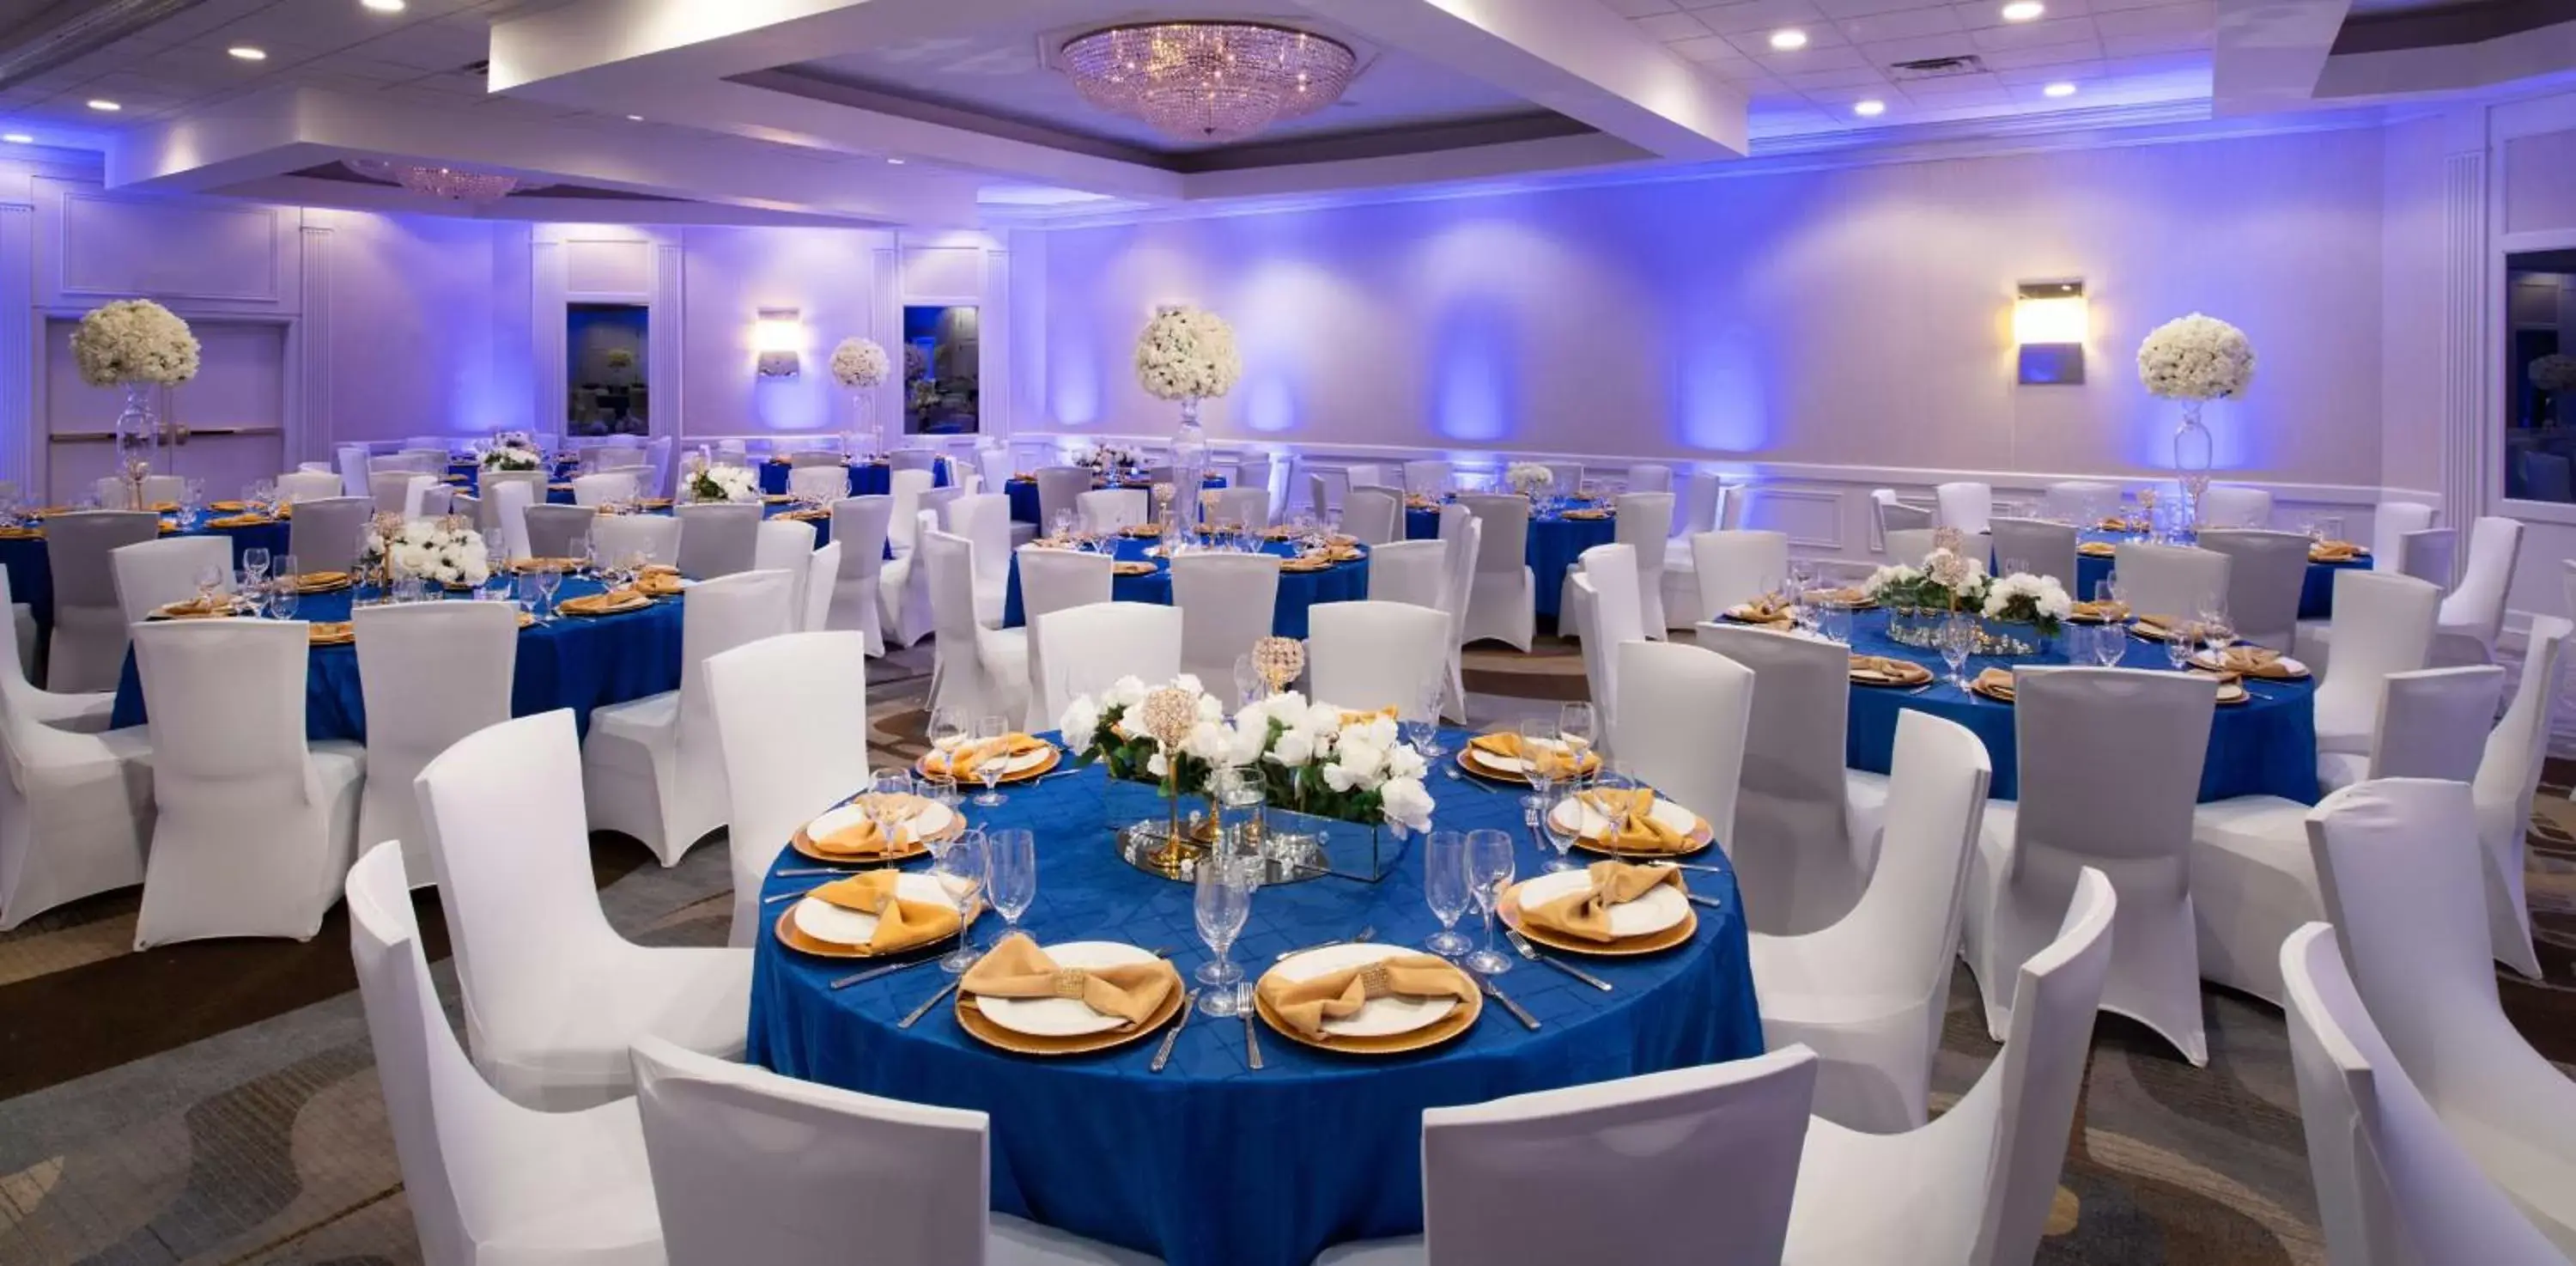 Meeting/conference room, Banquet Facilities in Hilton Arlington National Landing